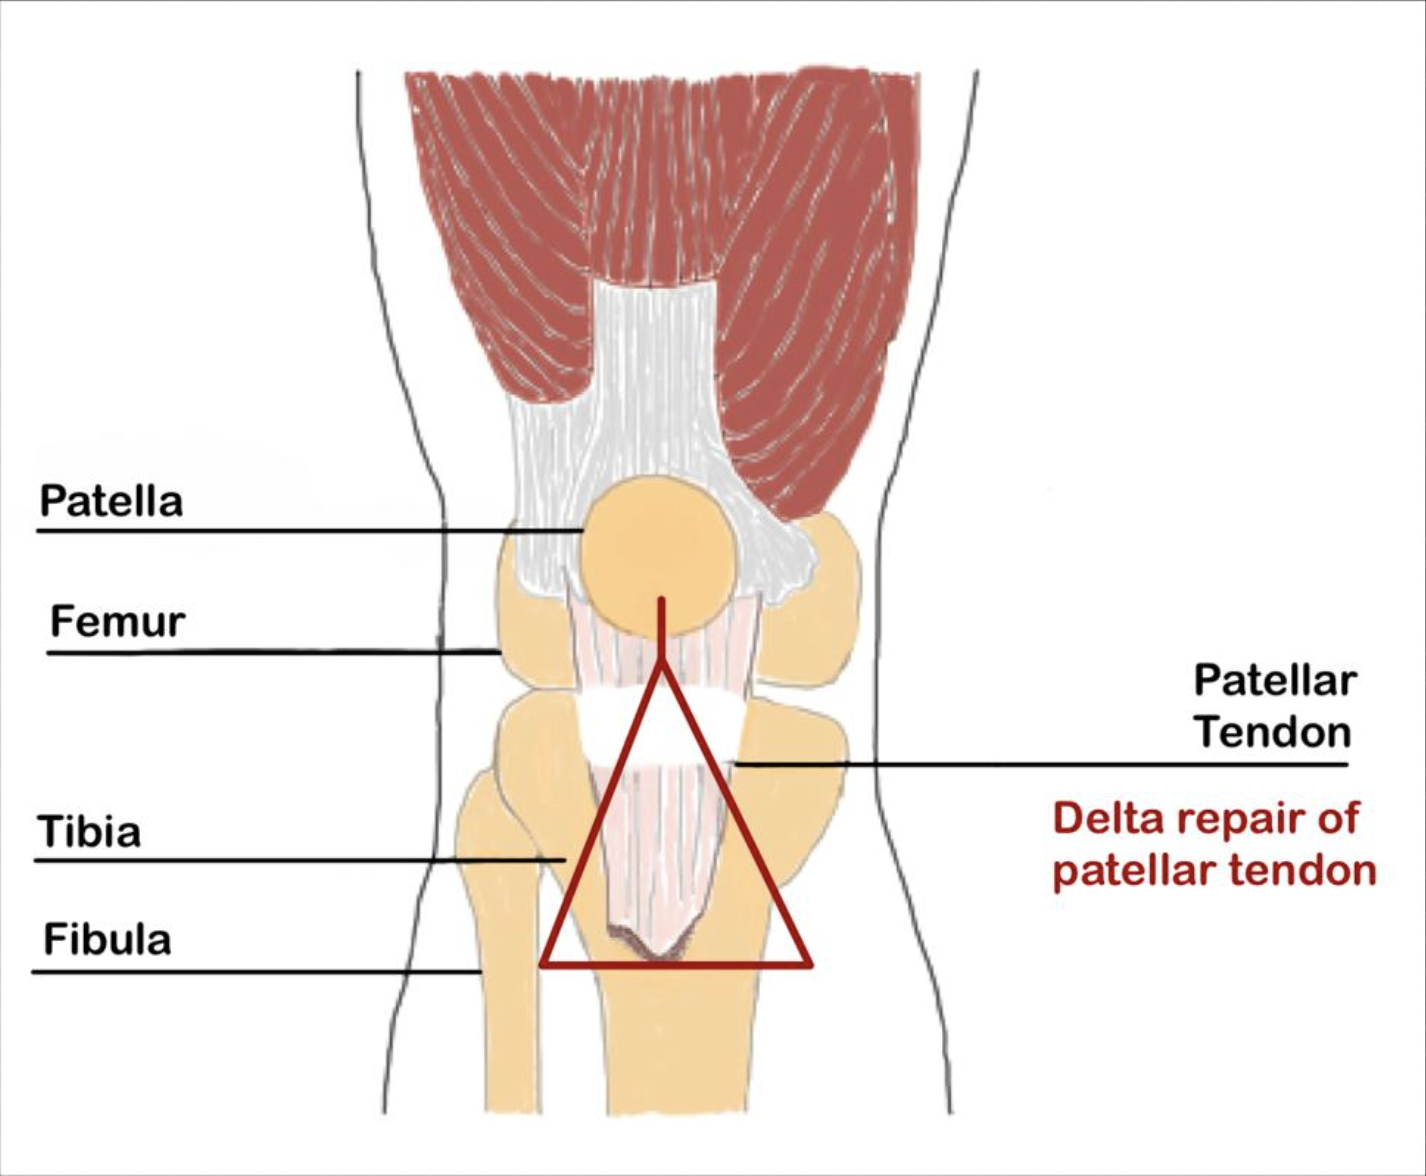 Delta technique reconstruction of a failed patellar tendon repair